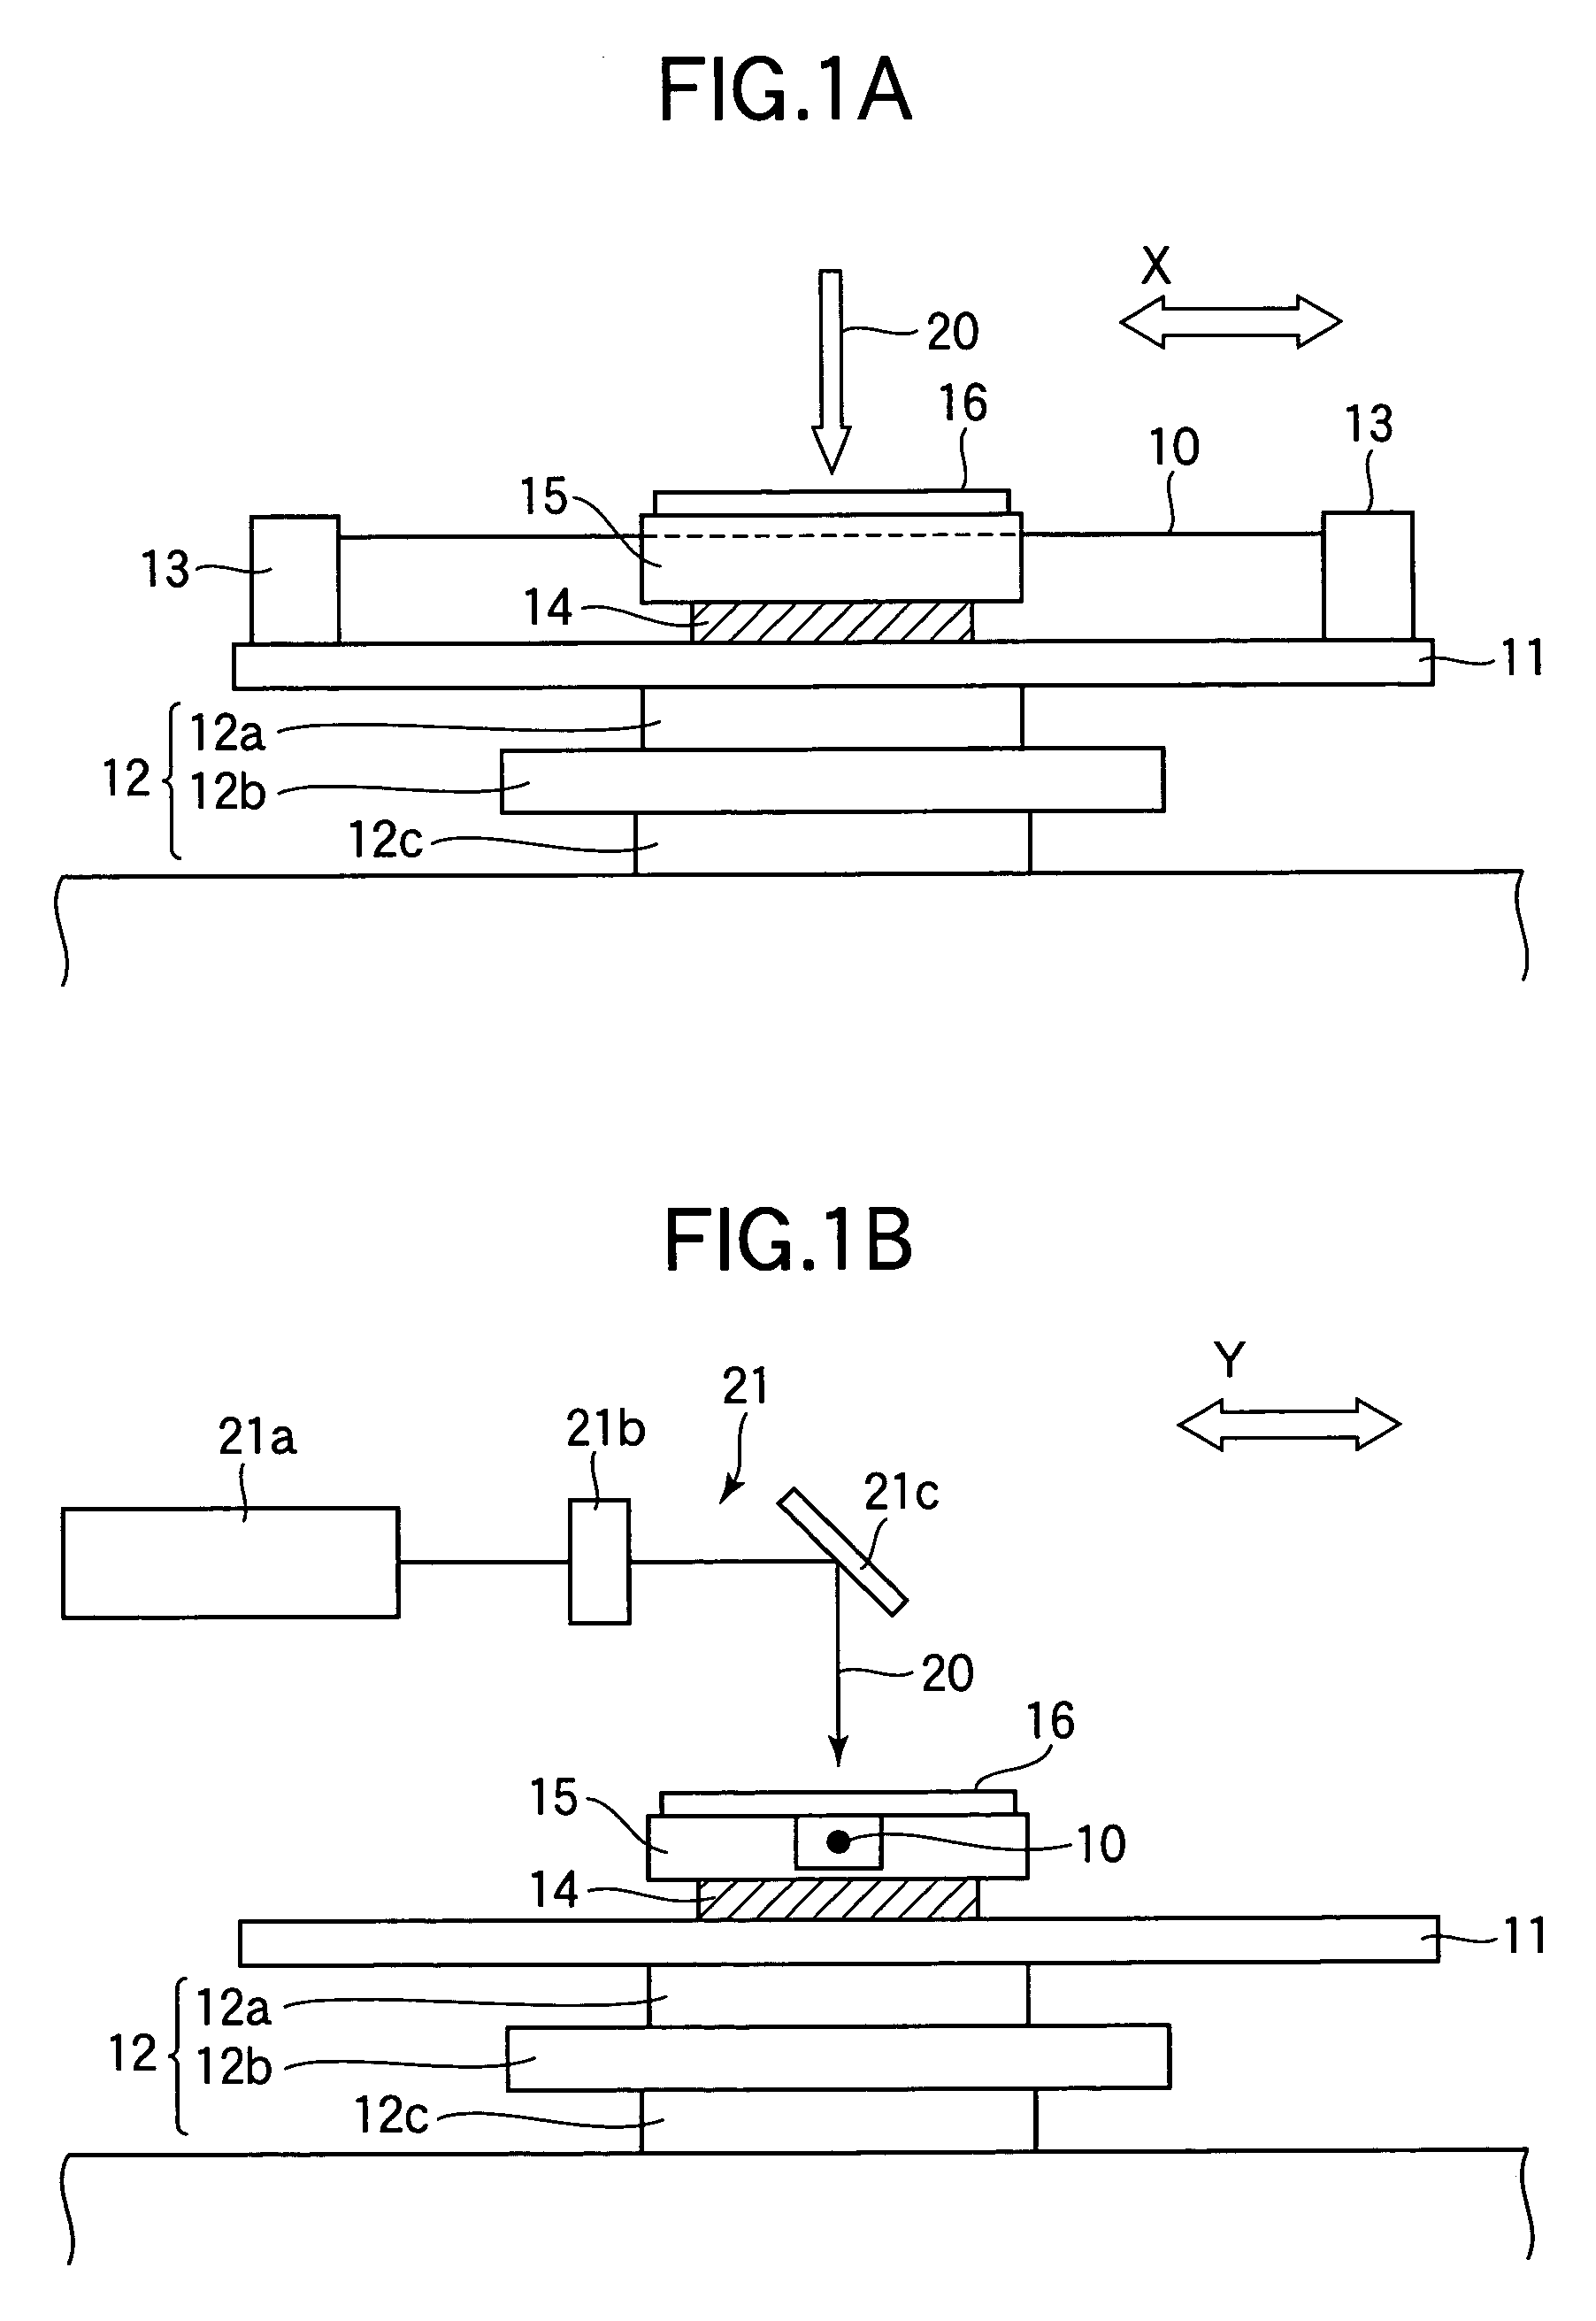 Method and apparatus for fabricating fiber Bragg gratings